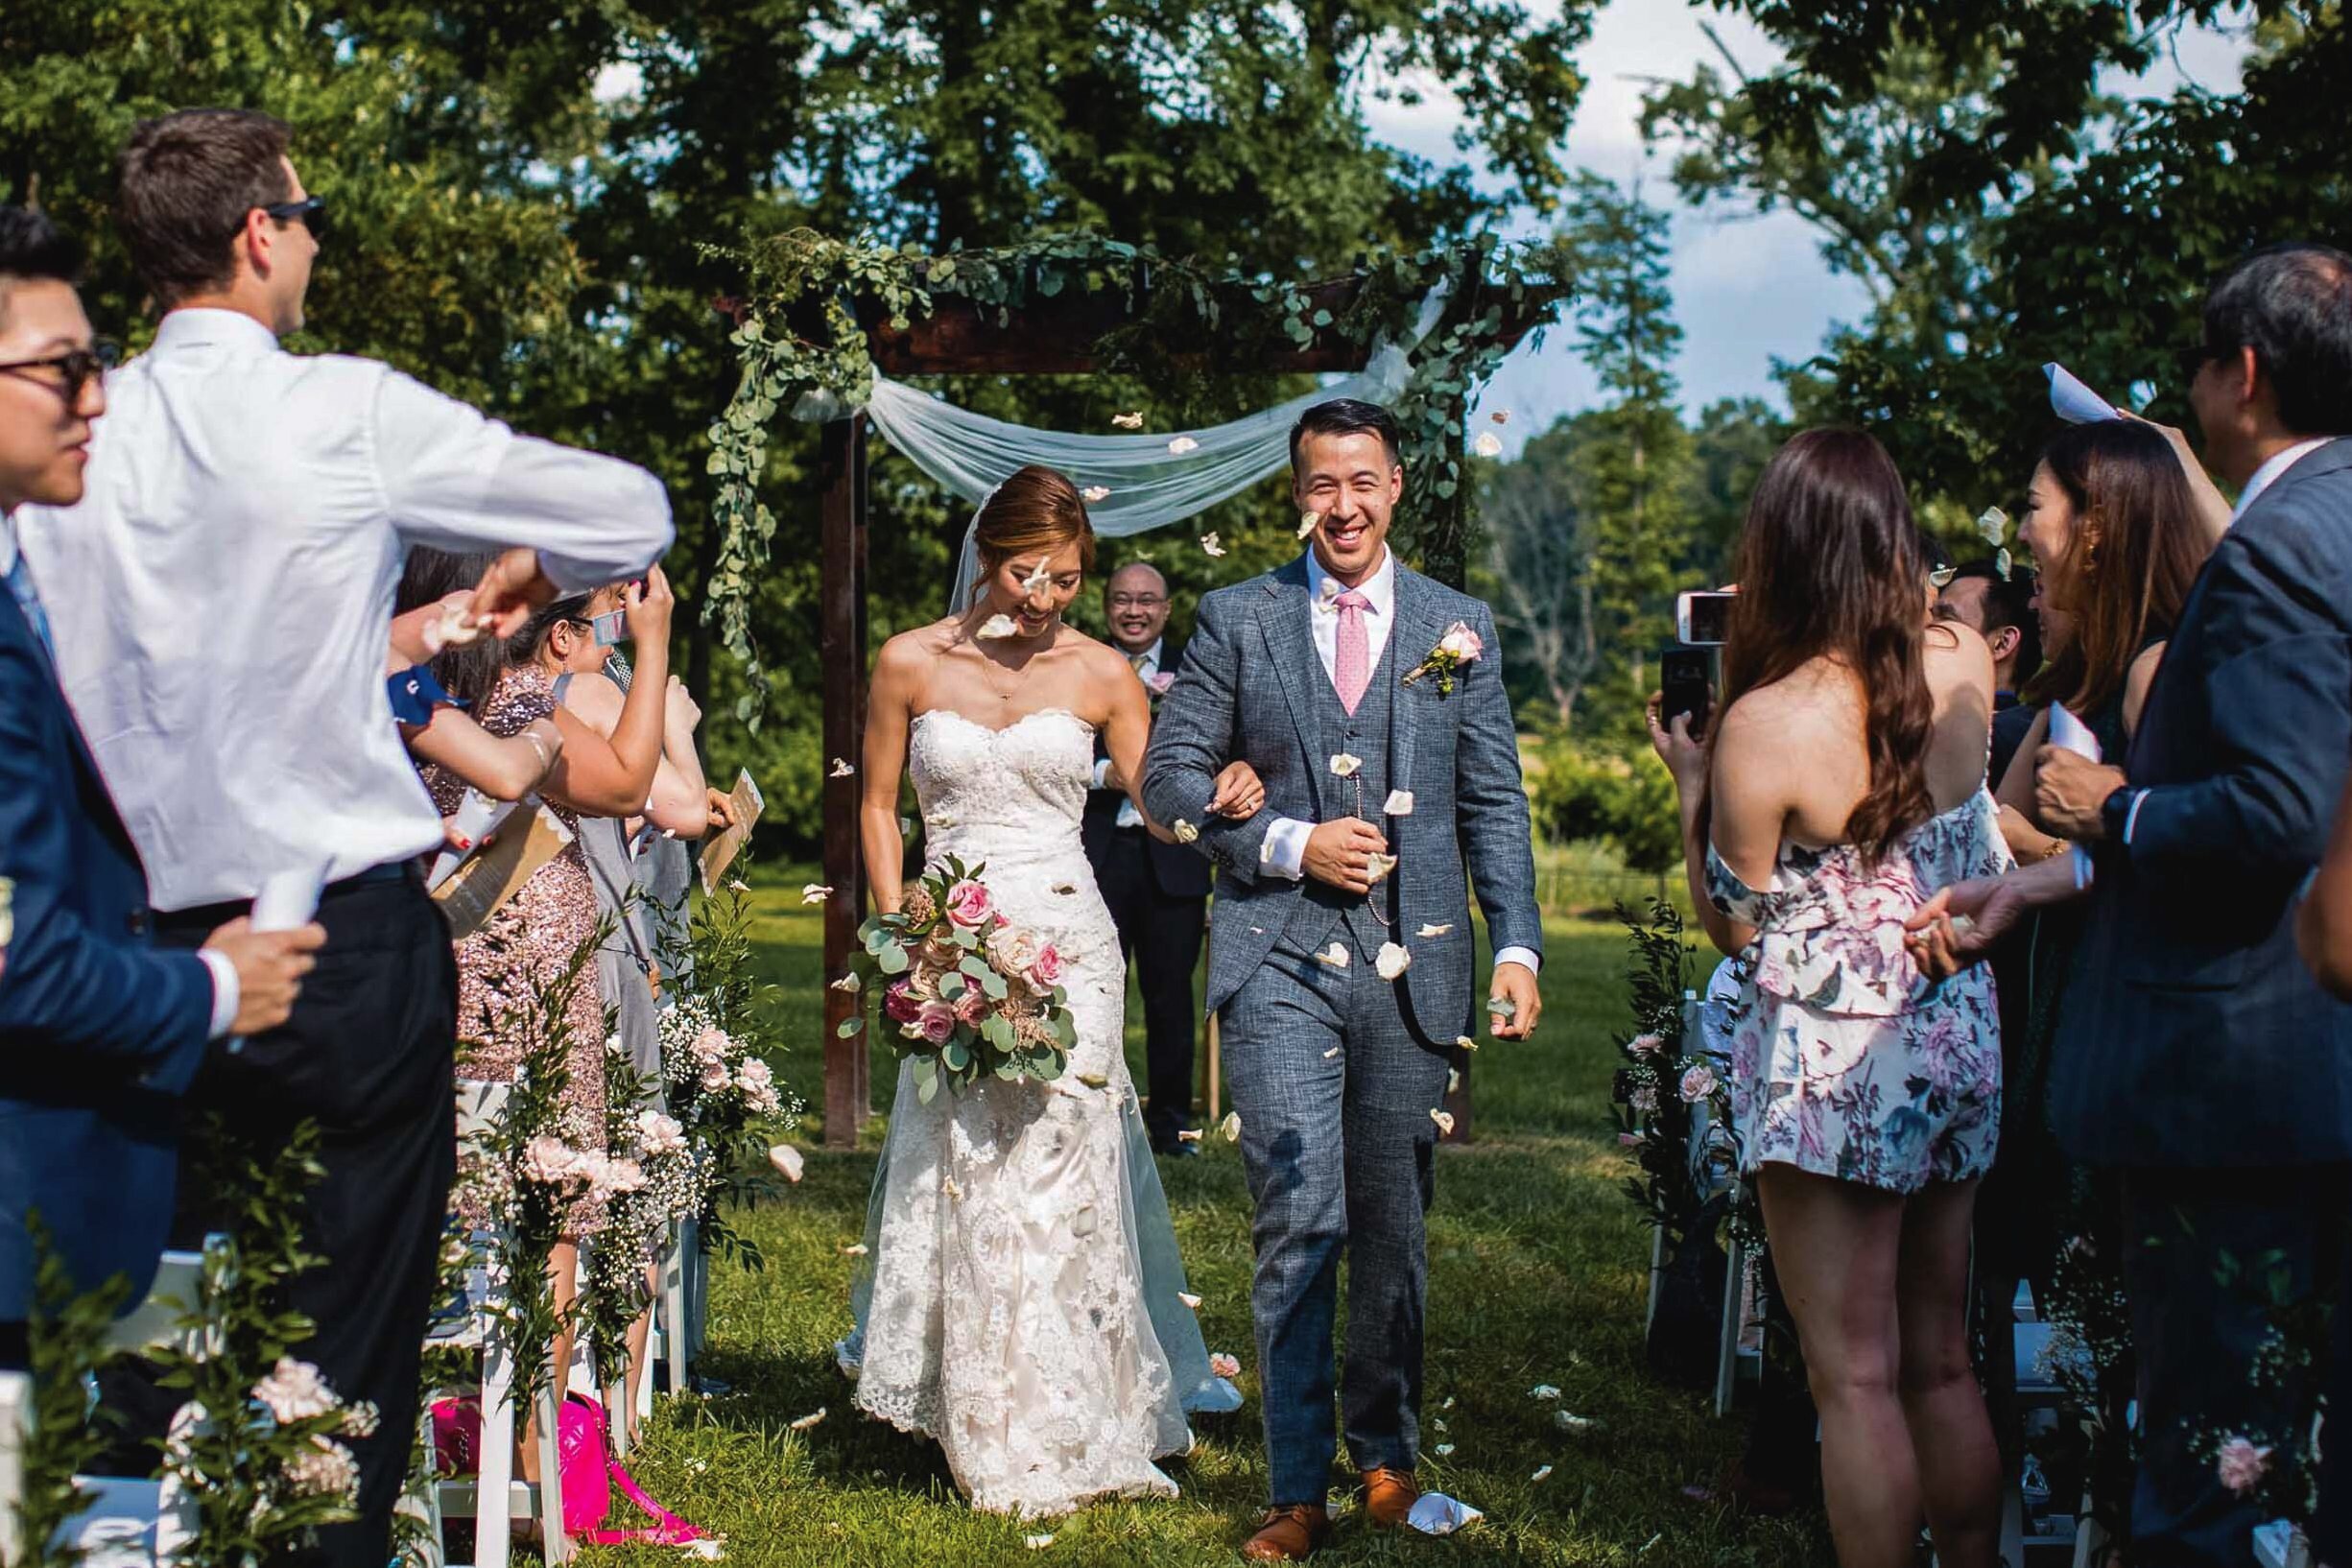 bride-groom-after-ceremony-aisle-flower-toss.jpg